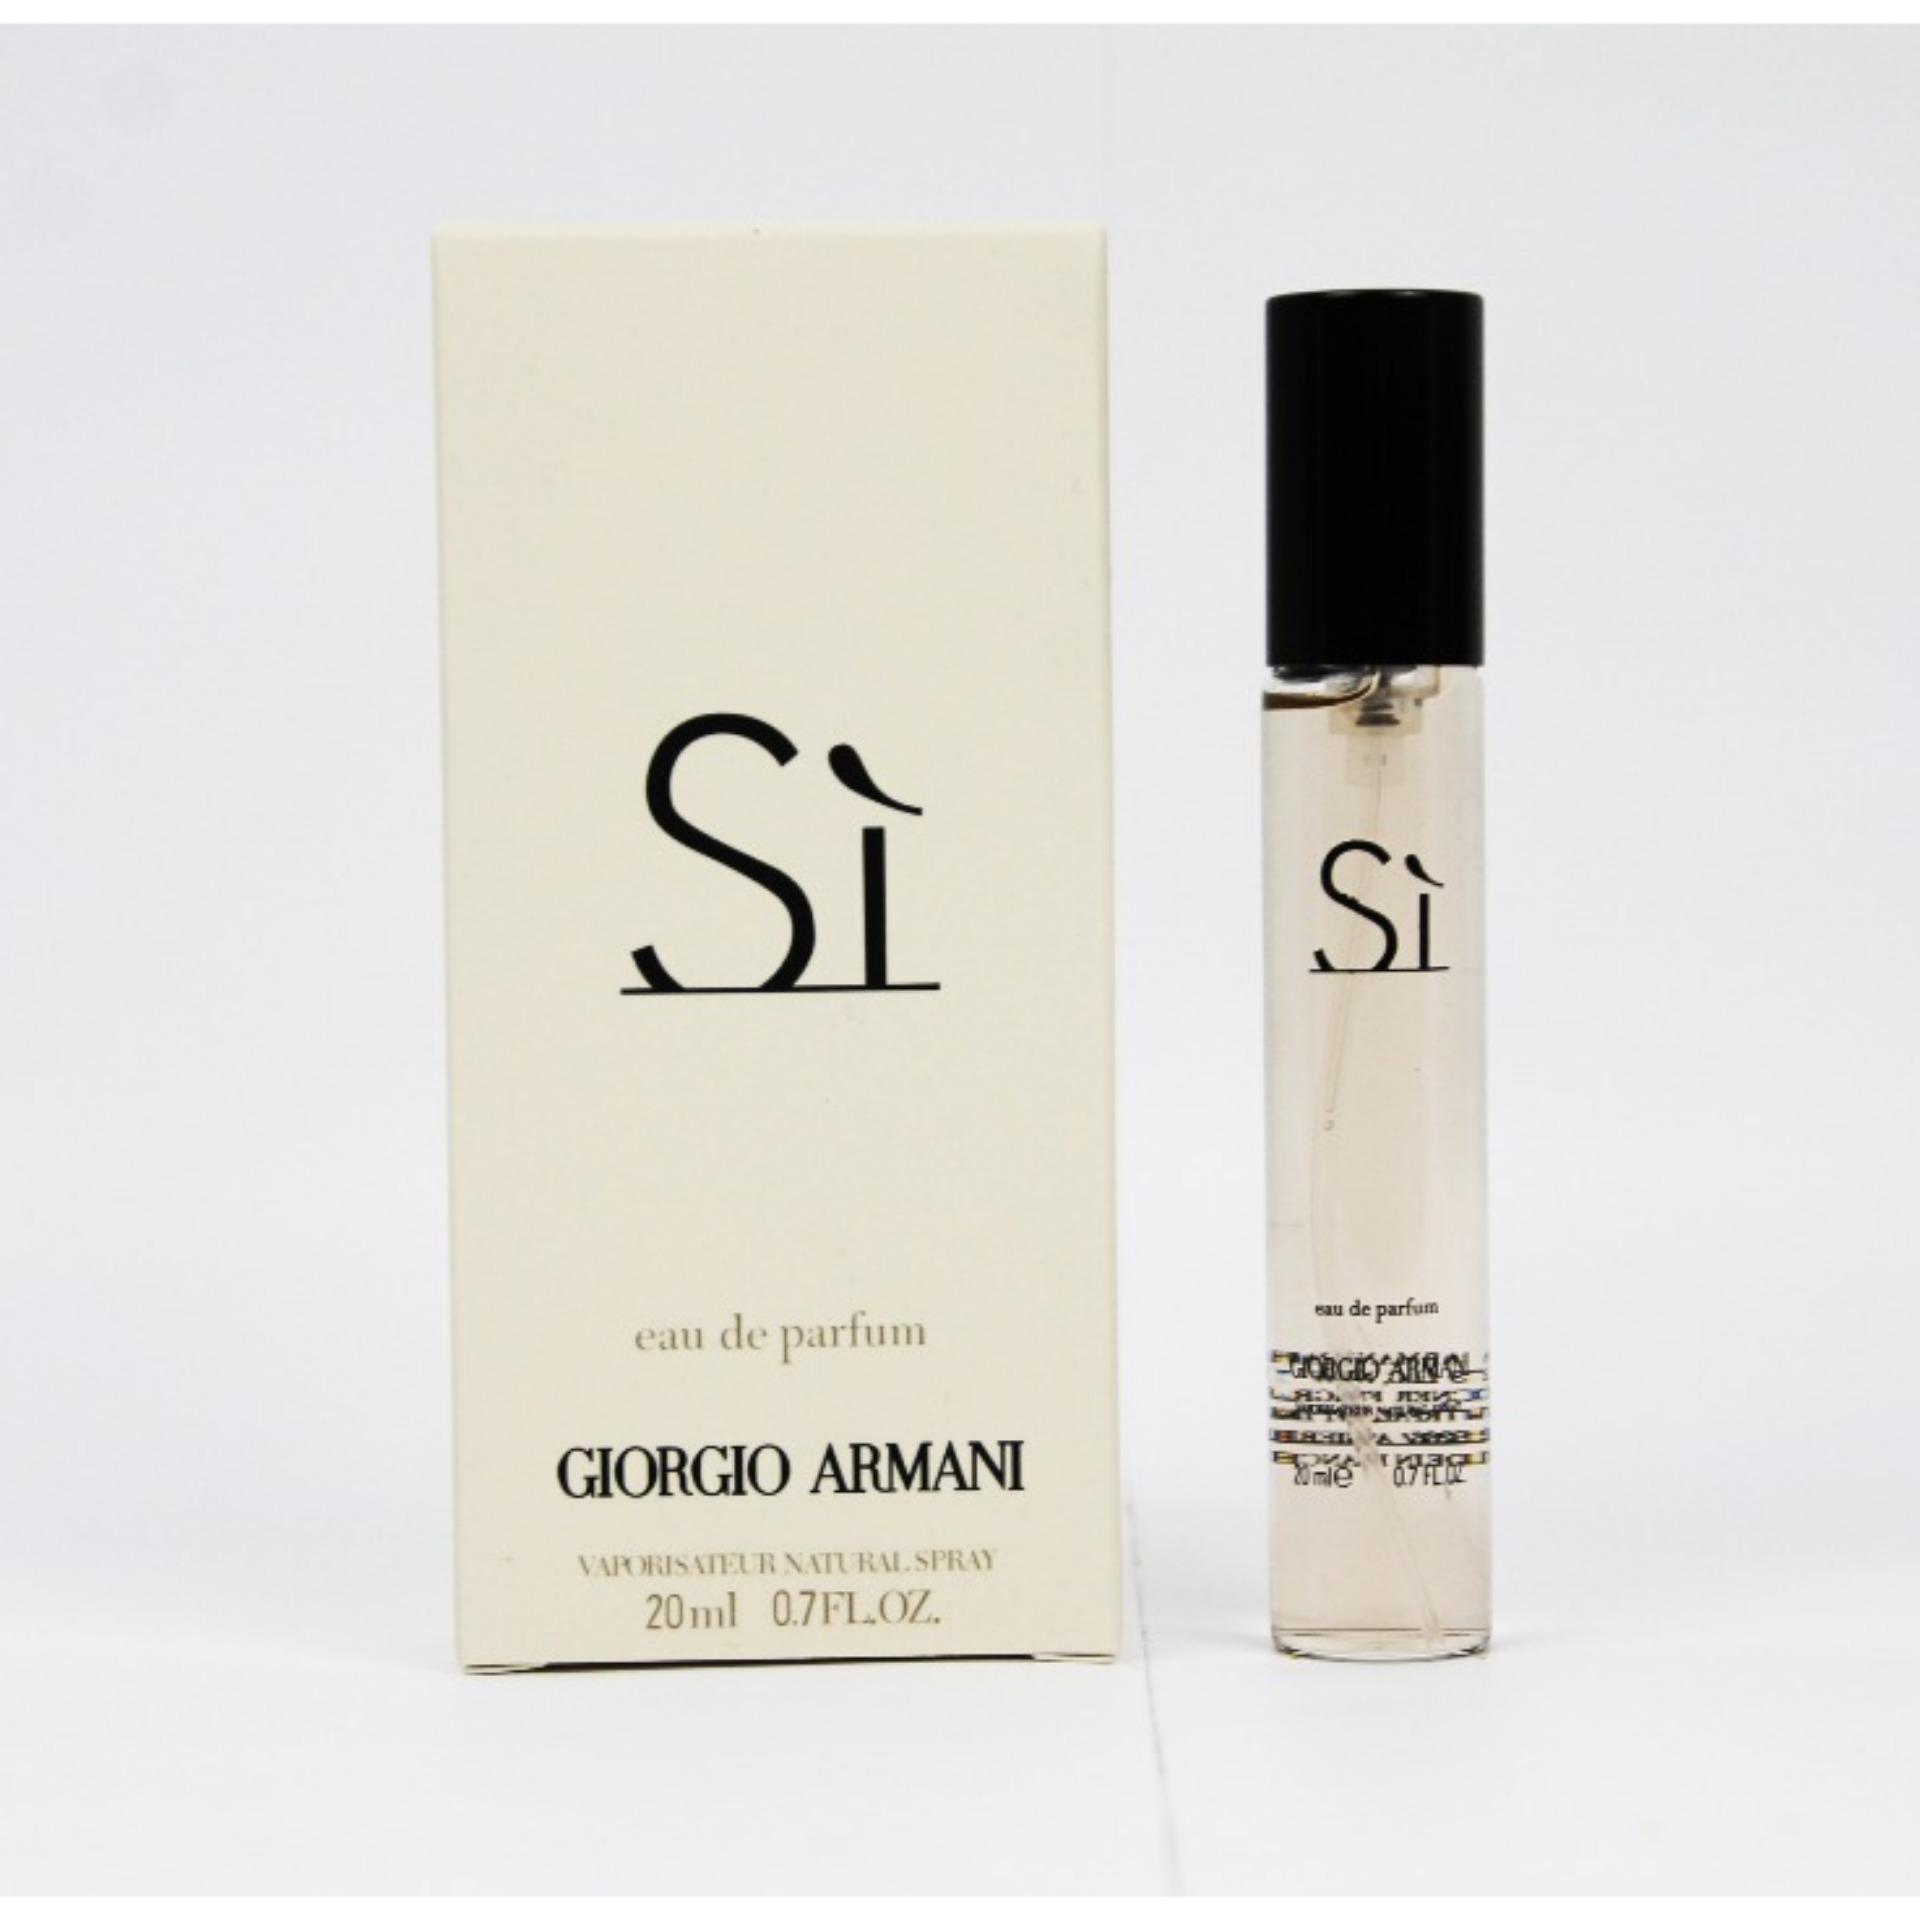 eau de parfum giorgio armani si